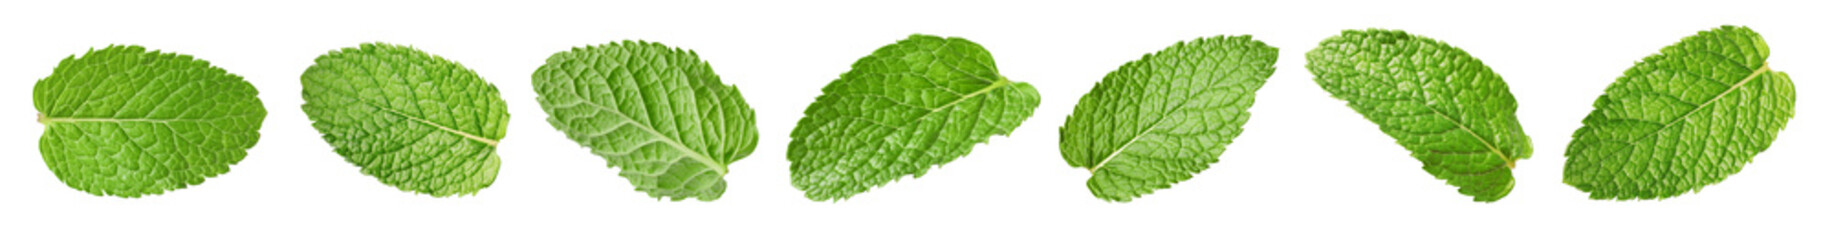 Many fresh mint leaves isolated on white